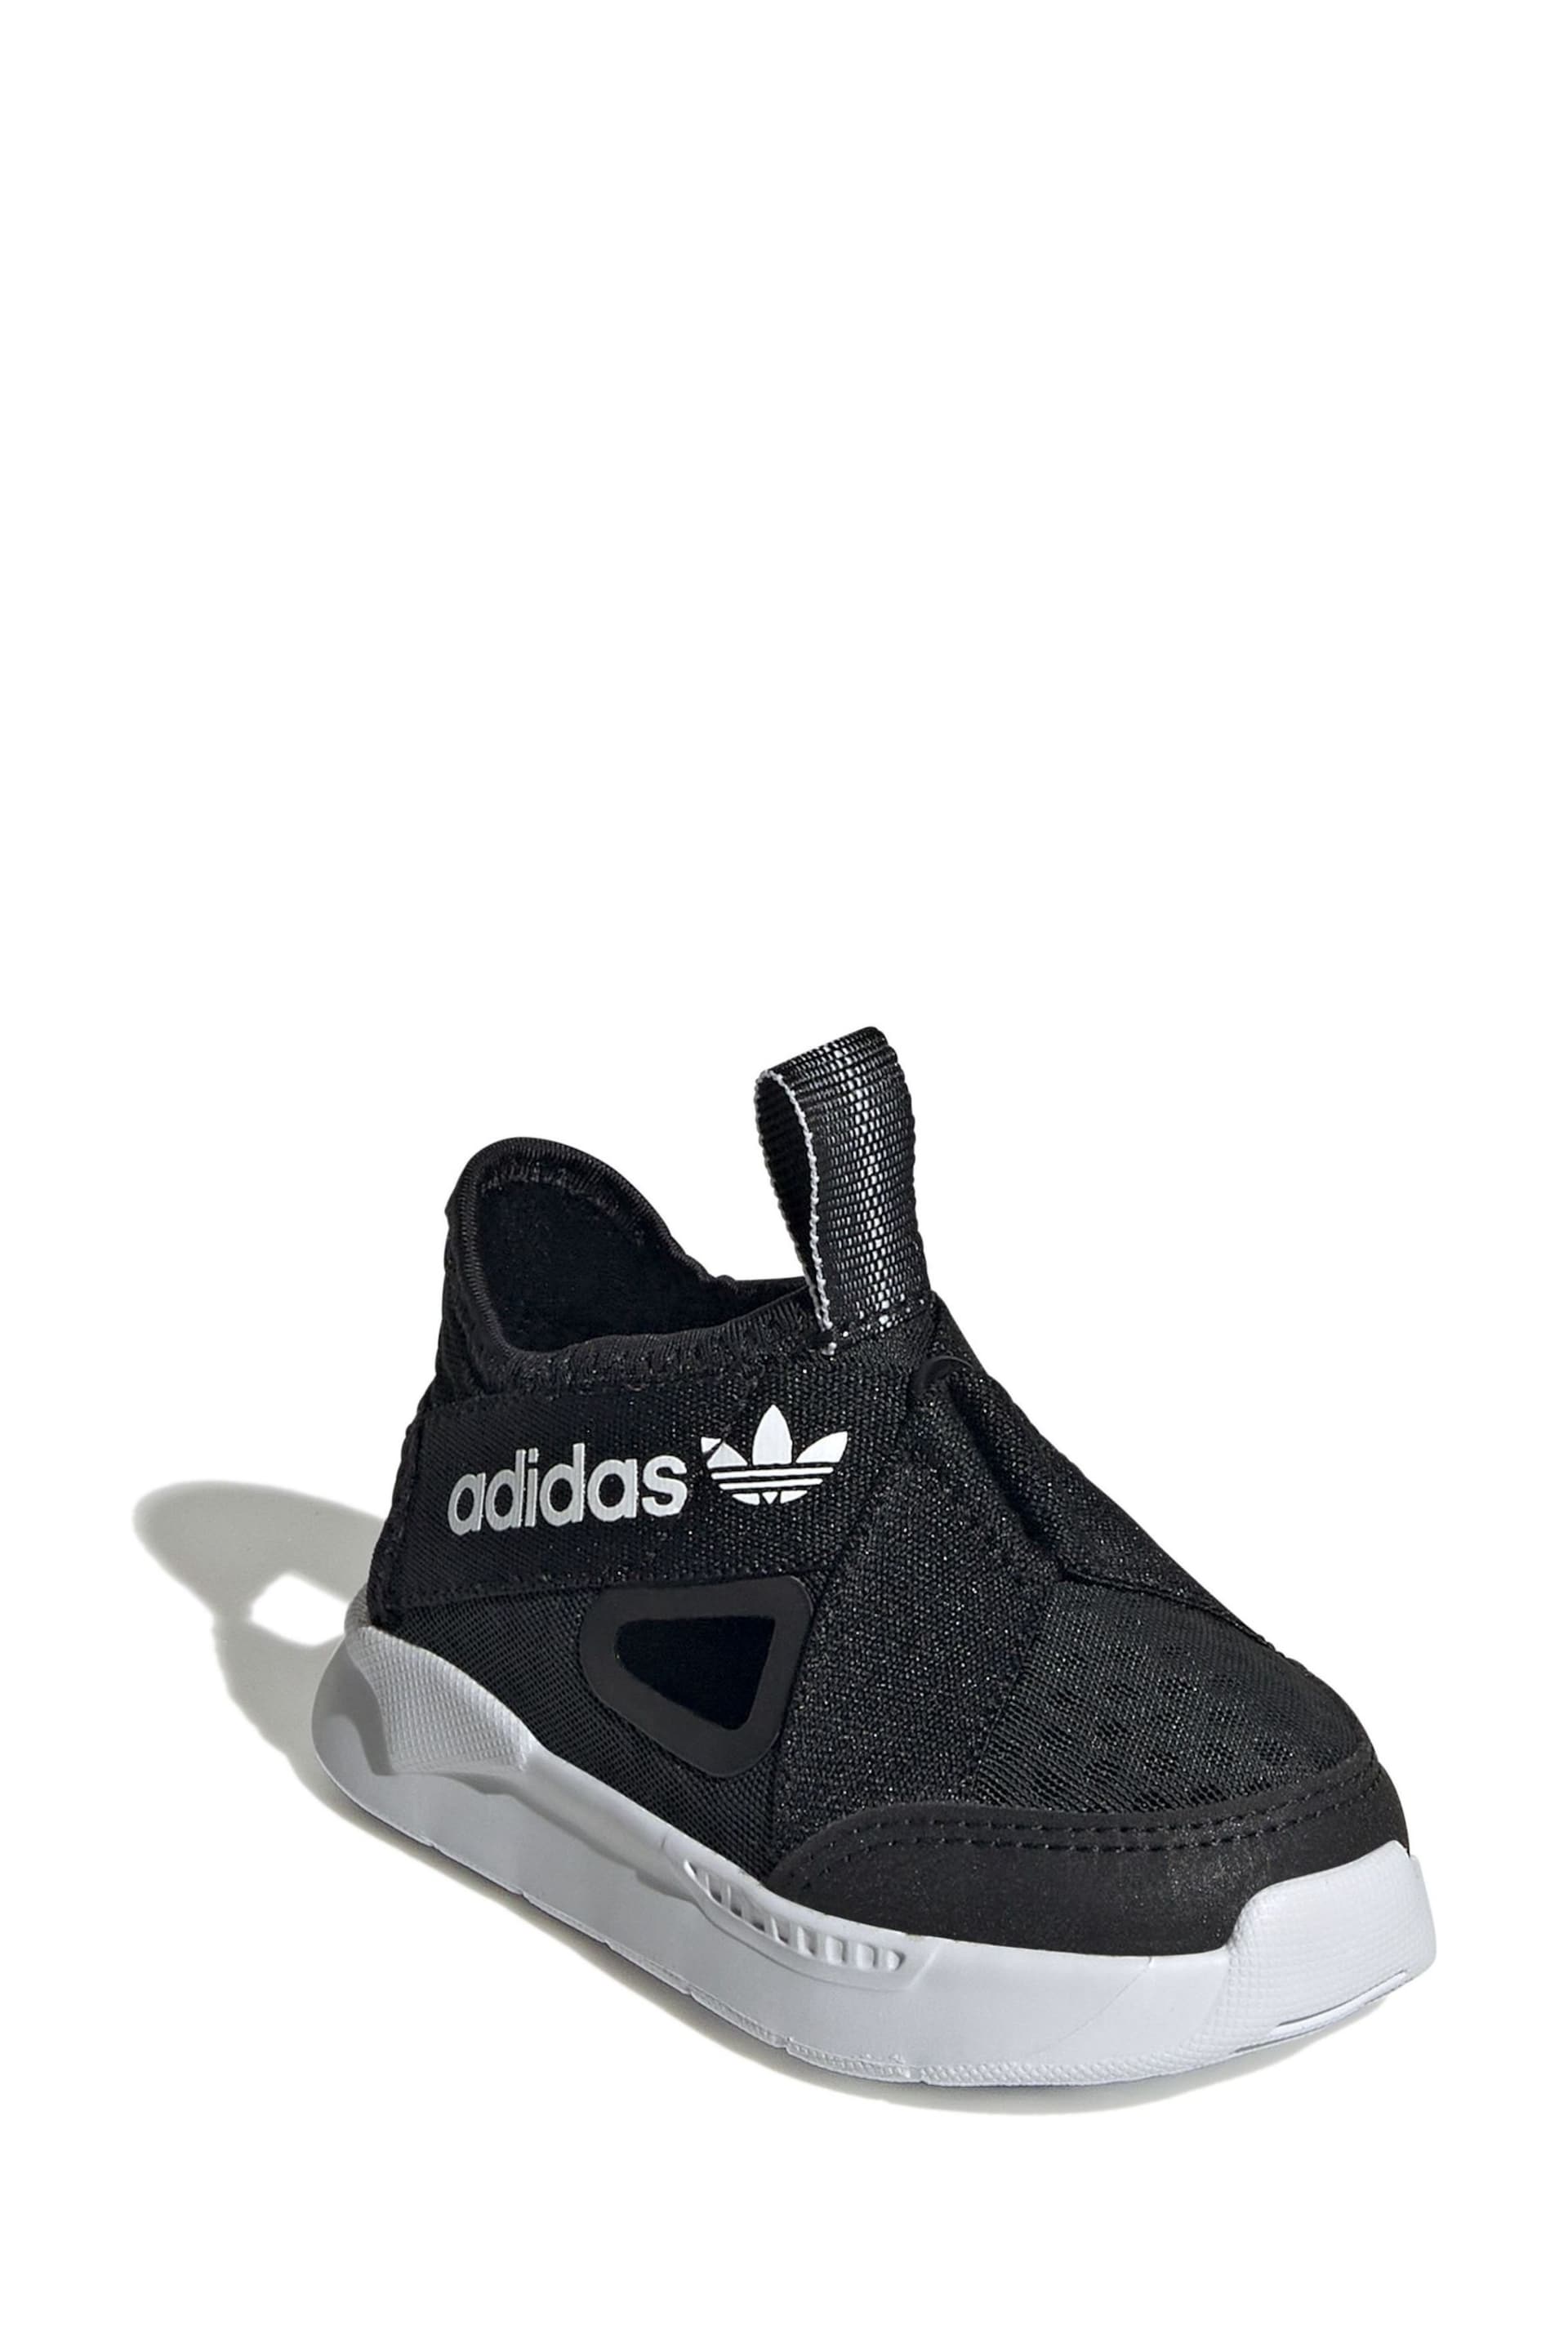 adidas Originals 360 Infant Black Sandals - Image 3 of 8